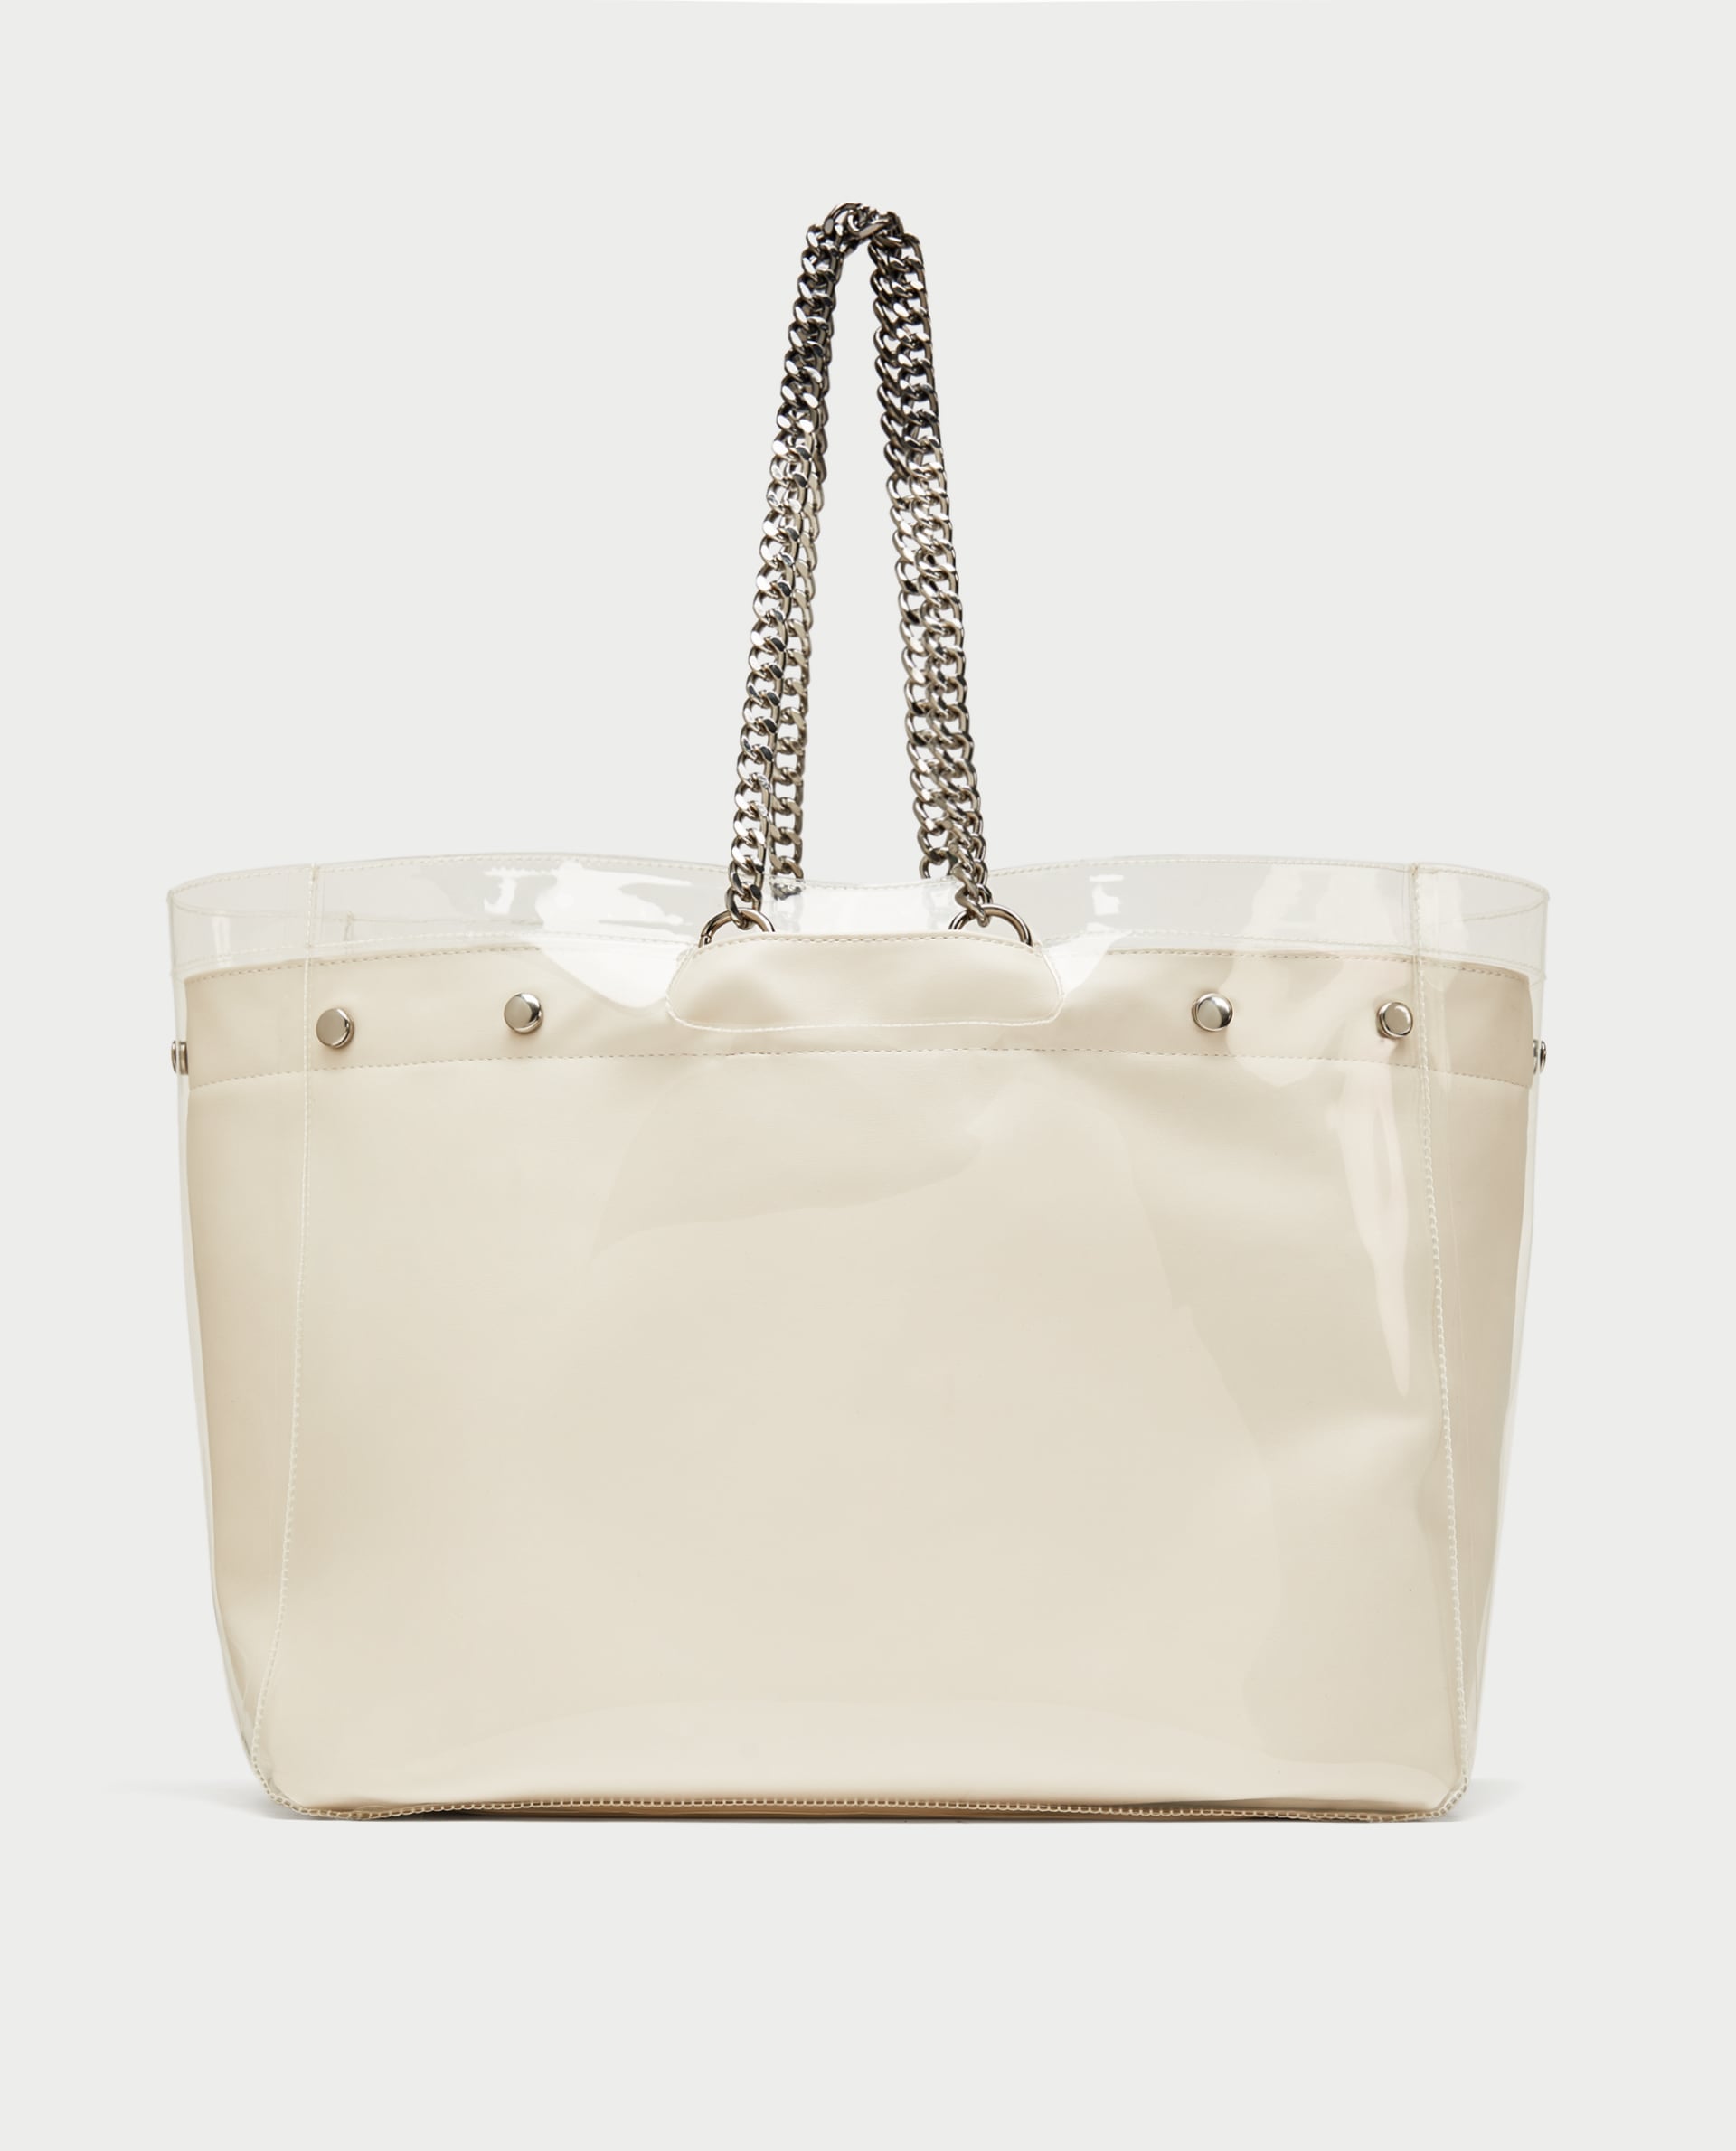 Zara Vinyl Tote Bag | The PVC Trend Is 